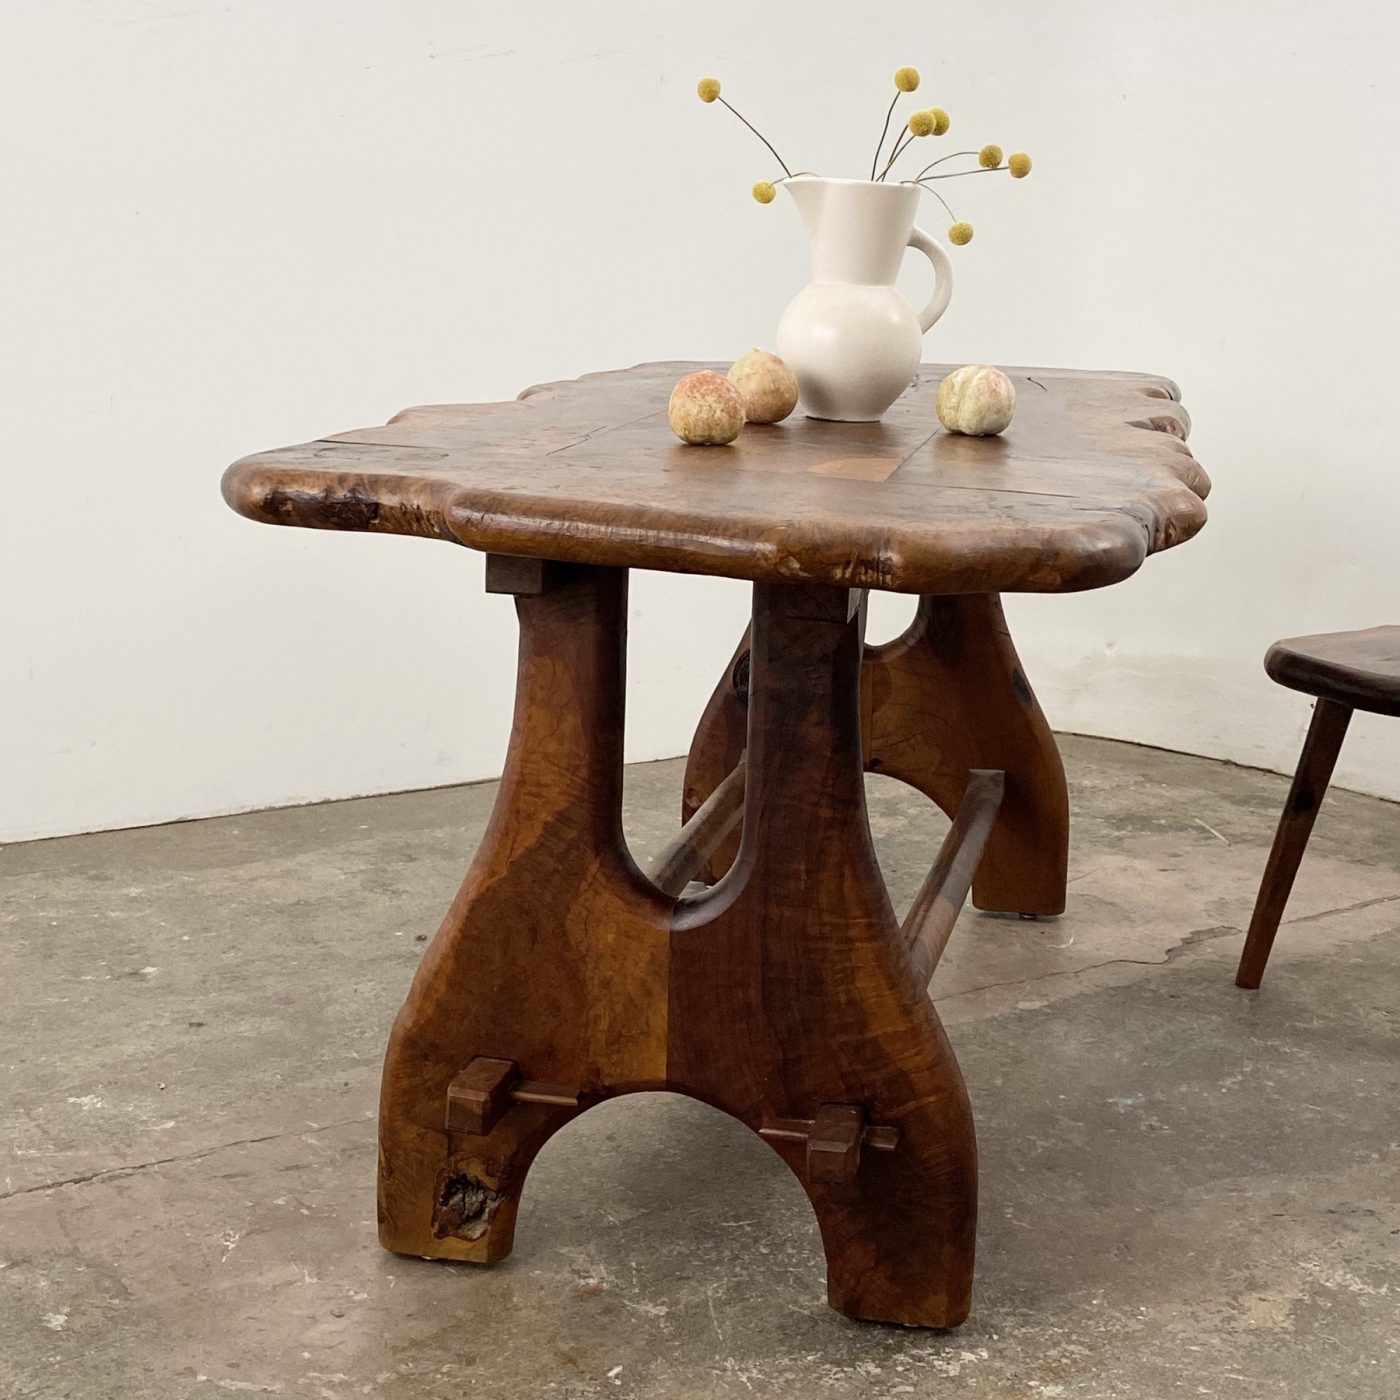 objet-vagabond-olive-table0001